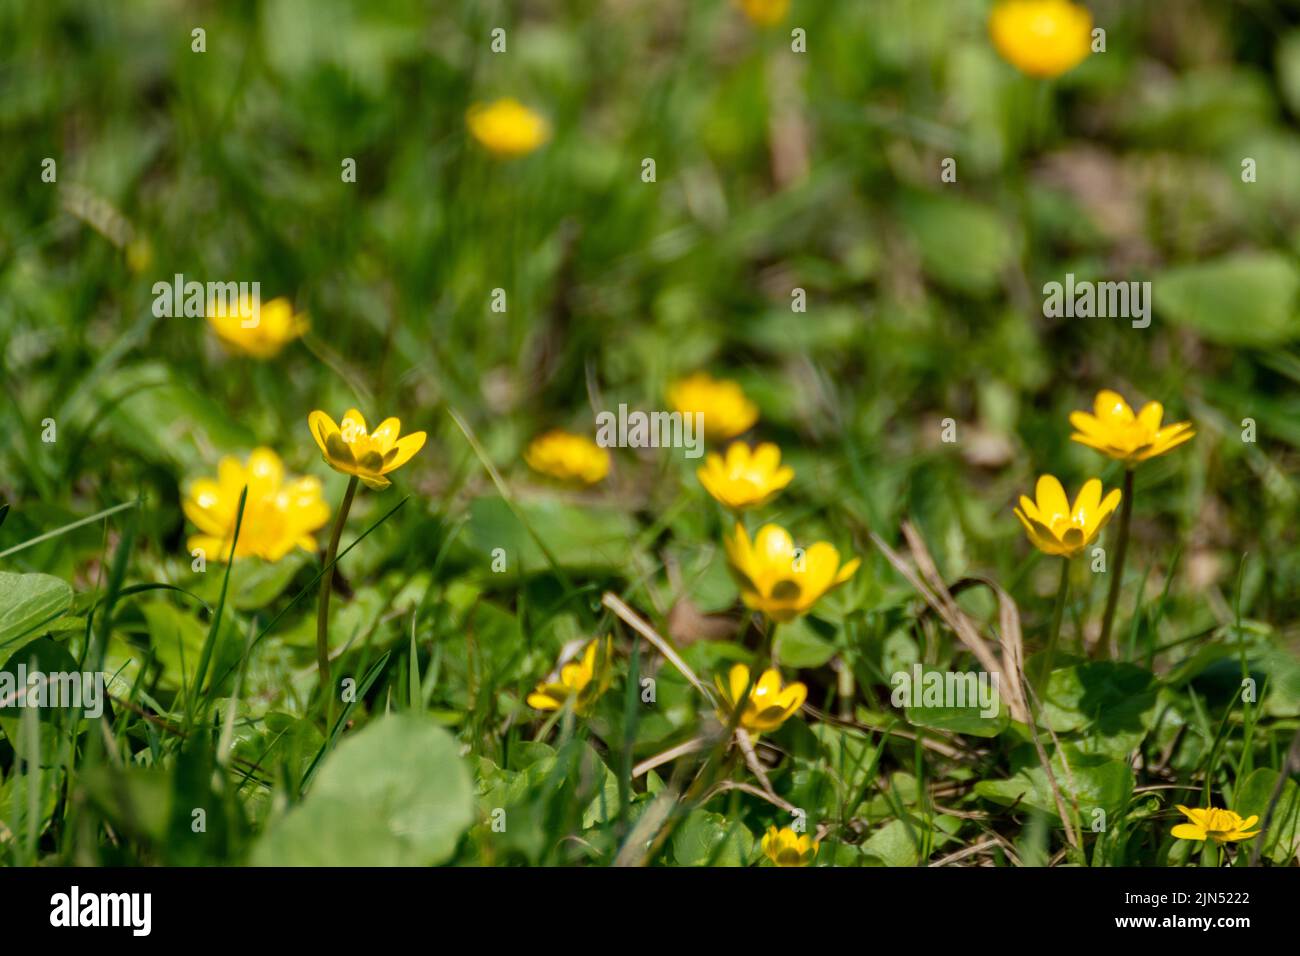 Gelbe Ficaria verna, kleinere Celandine- oder Pilewort-Blüten auf grünem Frühlingsfeld in Nahaufnahme. Selektiver Fokus auf lebendiges Blumenbelaub Stockfoto